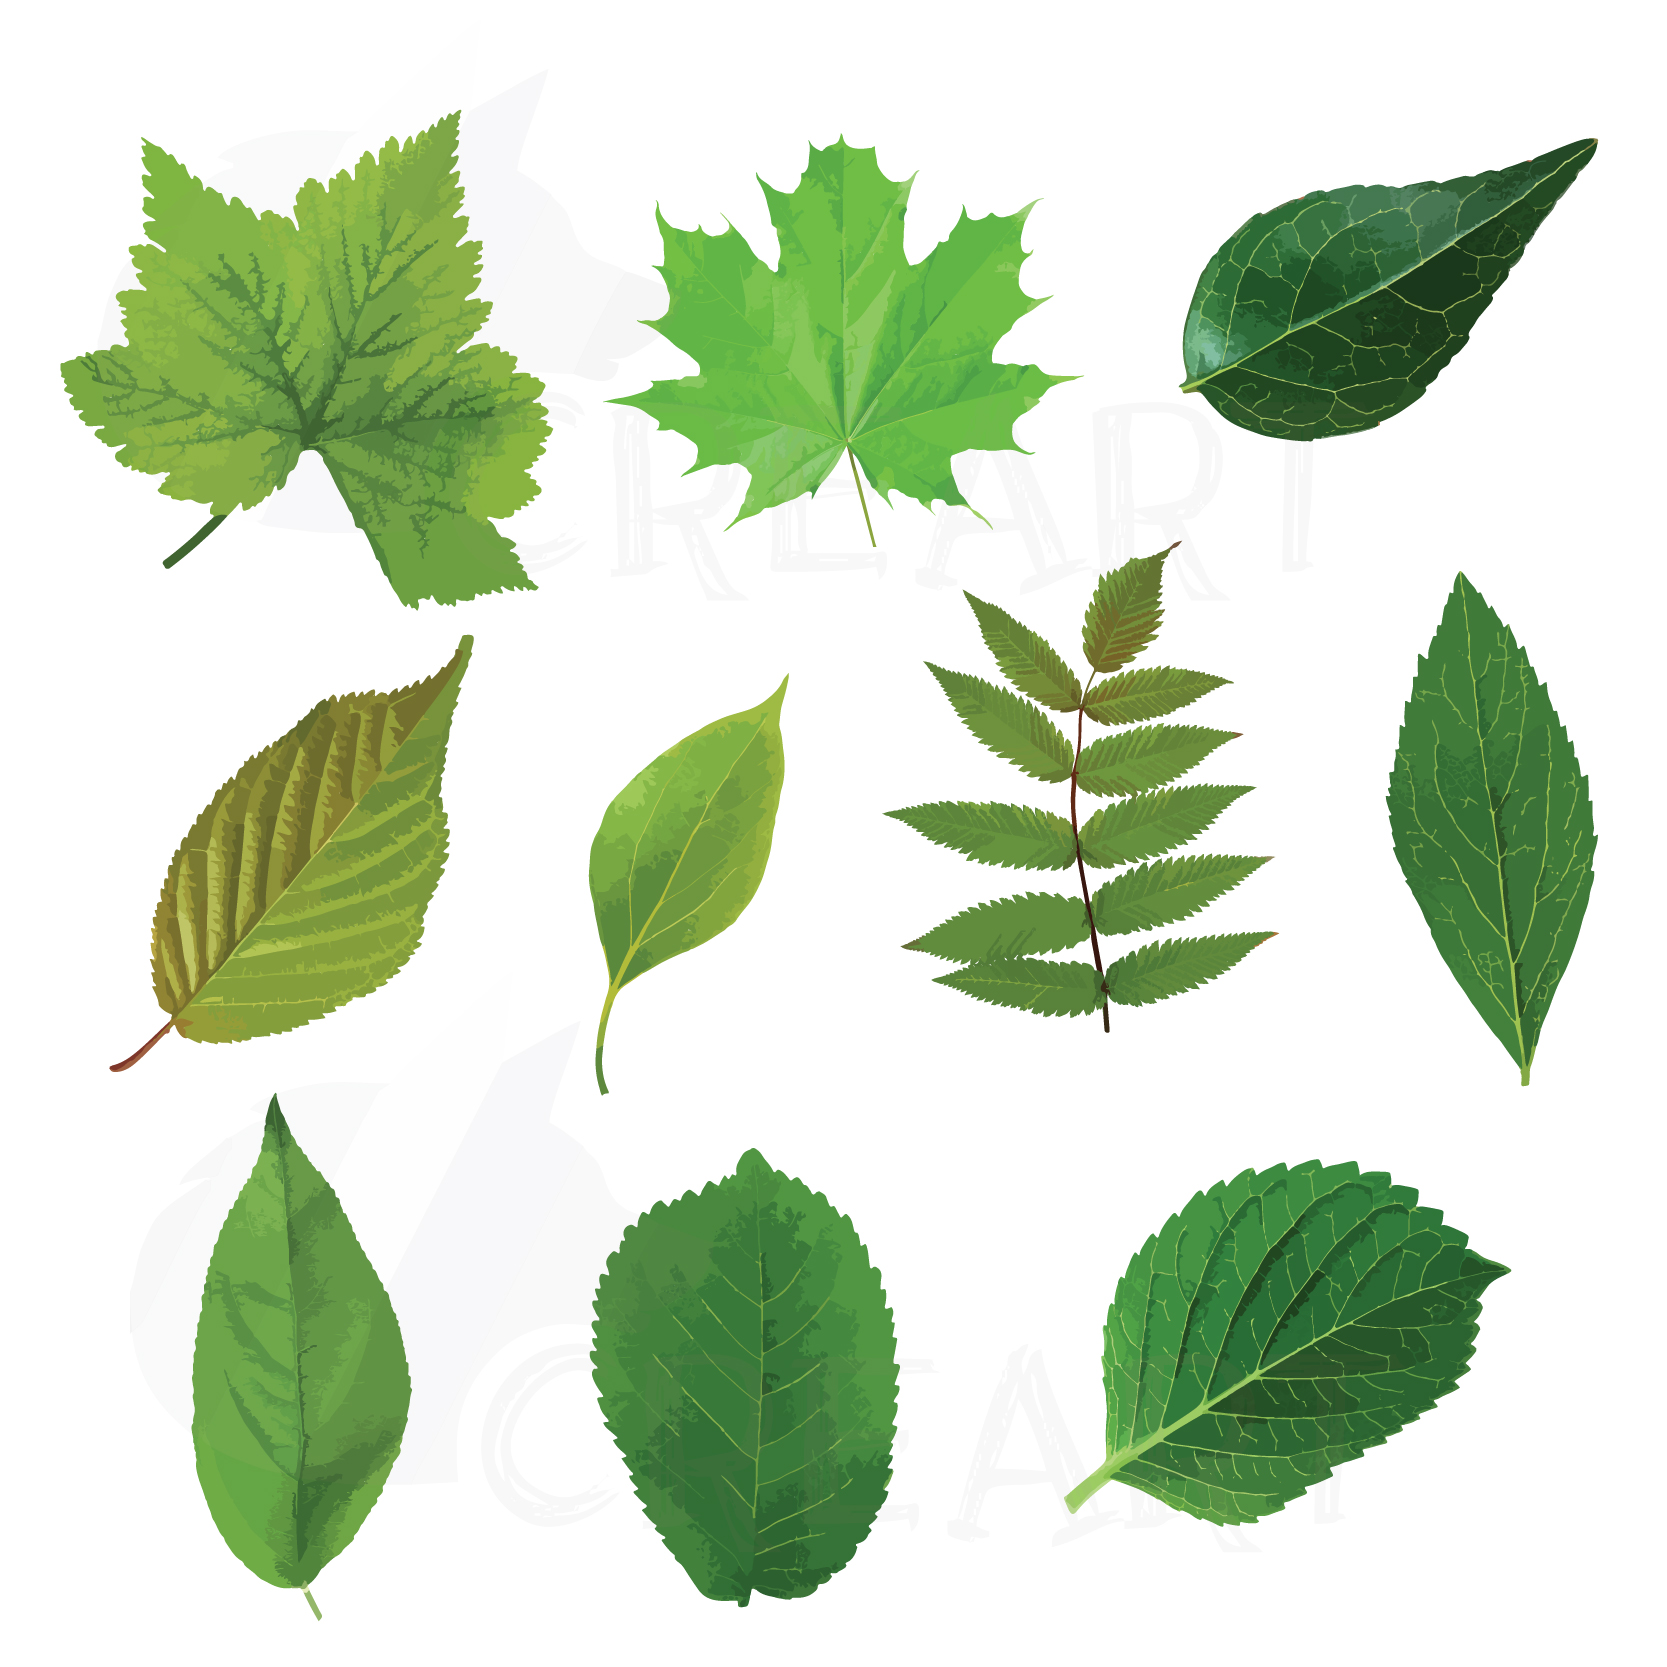 Watercolor leaf clip art pack. Eps, png, jpg, pdf, svg, vector